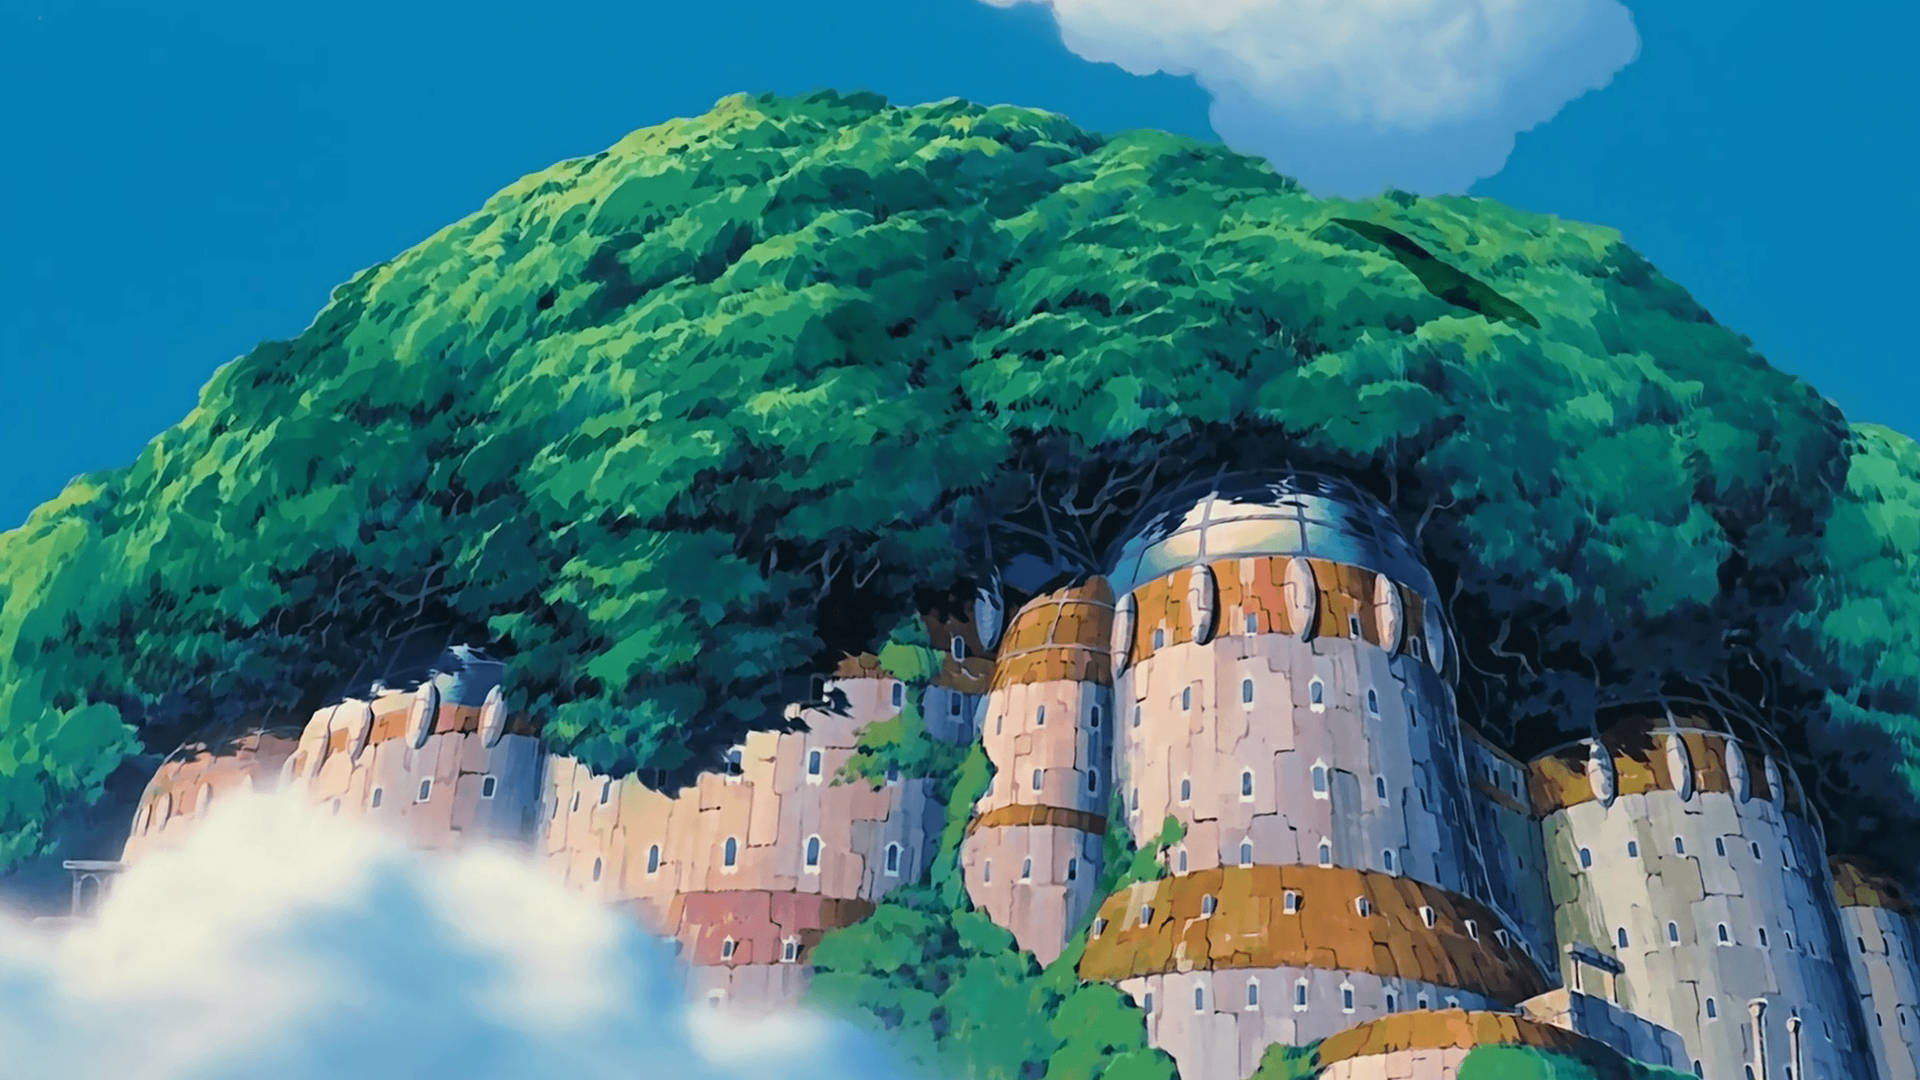 Studio Ghibli 2560X1440 Wallpaper and Background Image